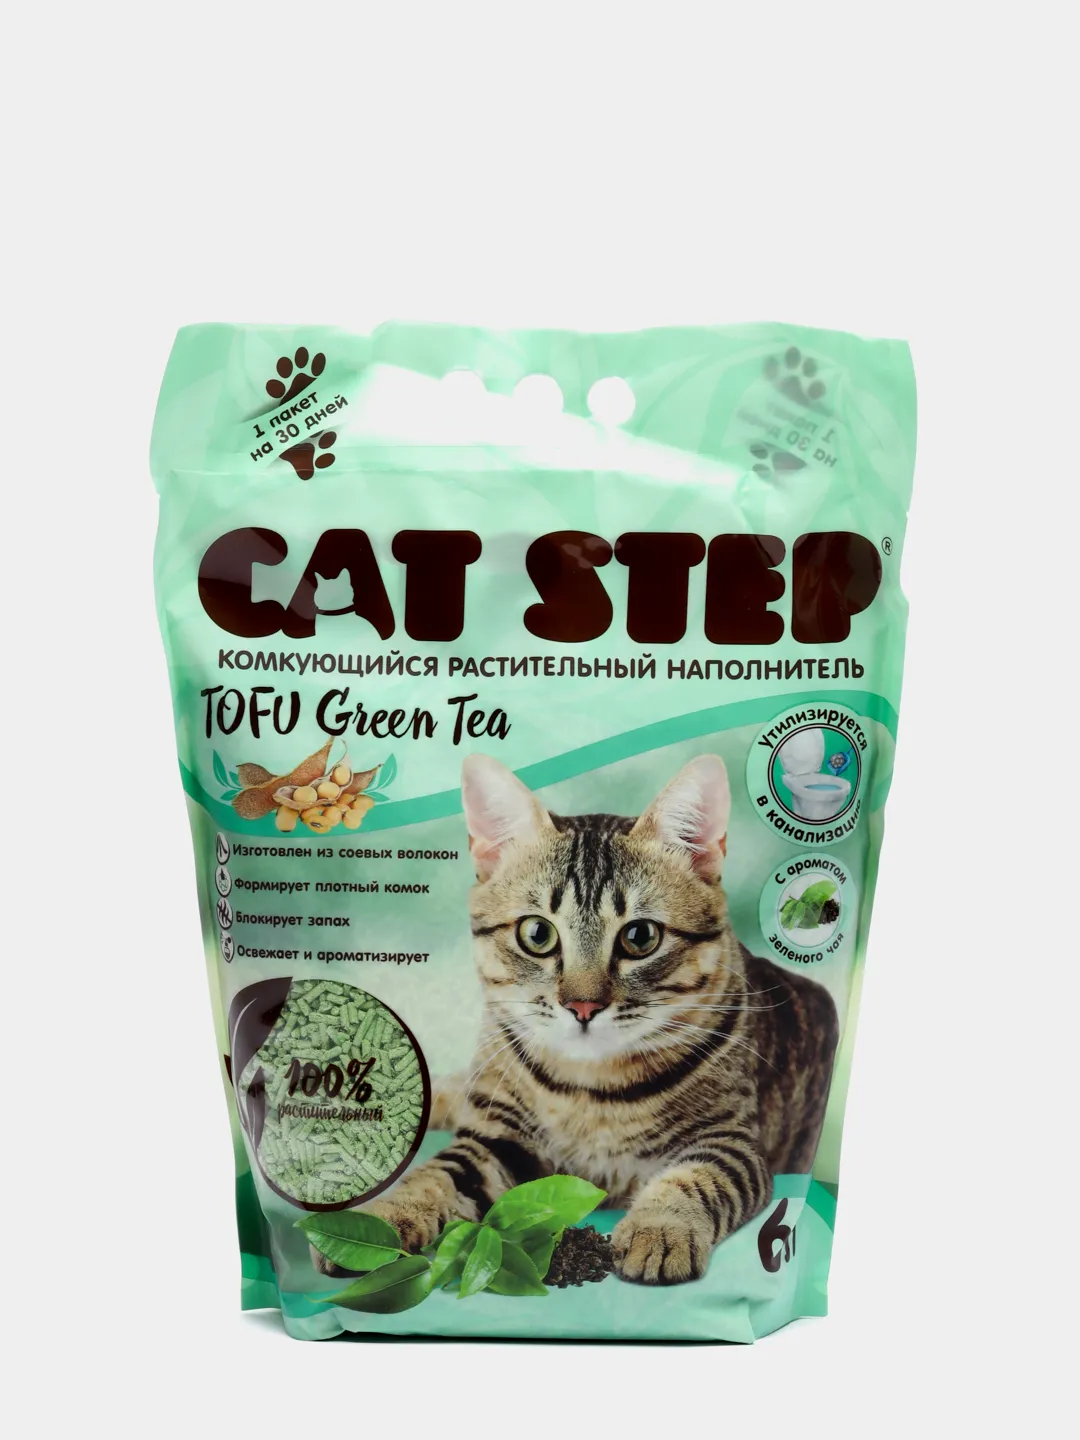 Наполнитель cat step tofu. Cat Step Tofu 6 л. Cat Step наполнитель соевый. Cat Step наполнитель Tofu Green Tea комкующийся 4л. Наполнитель для кошачьего соевый тофу Green Tea Cat Step.